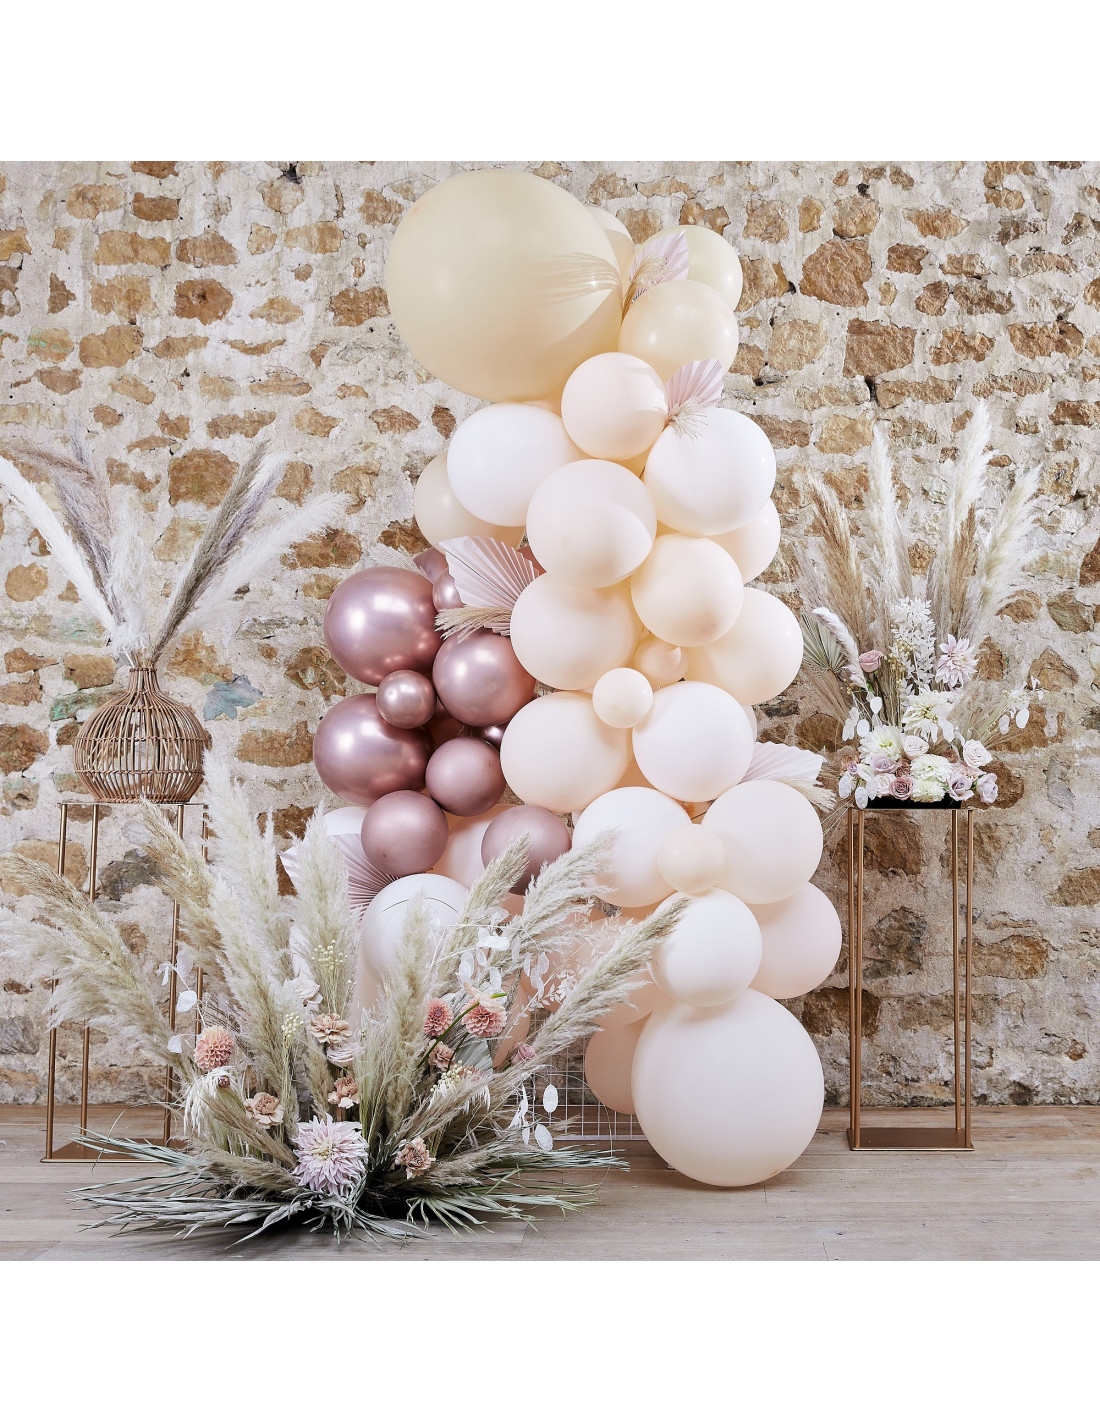 8 Ballons Anniversaire 1 An Roses et Blancs - Les Bambetises